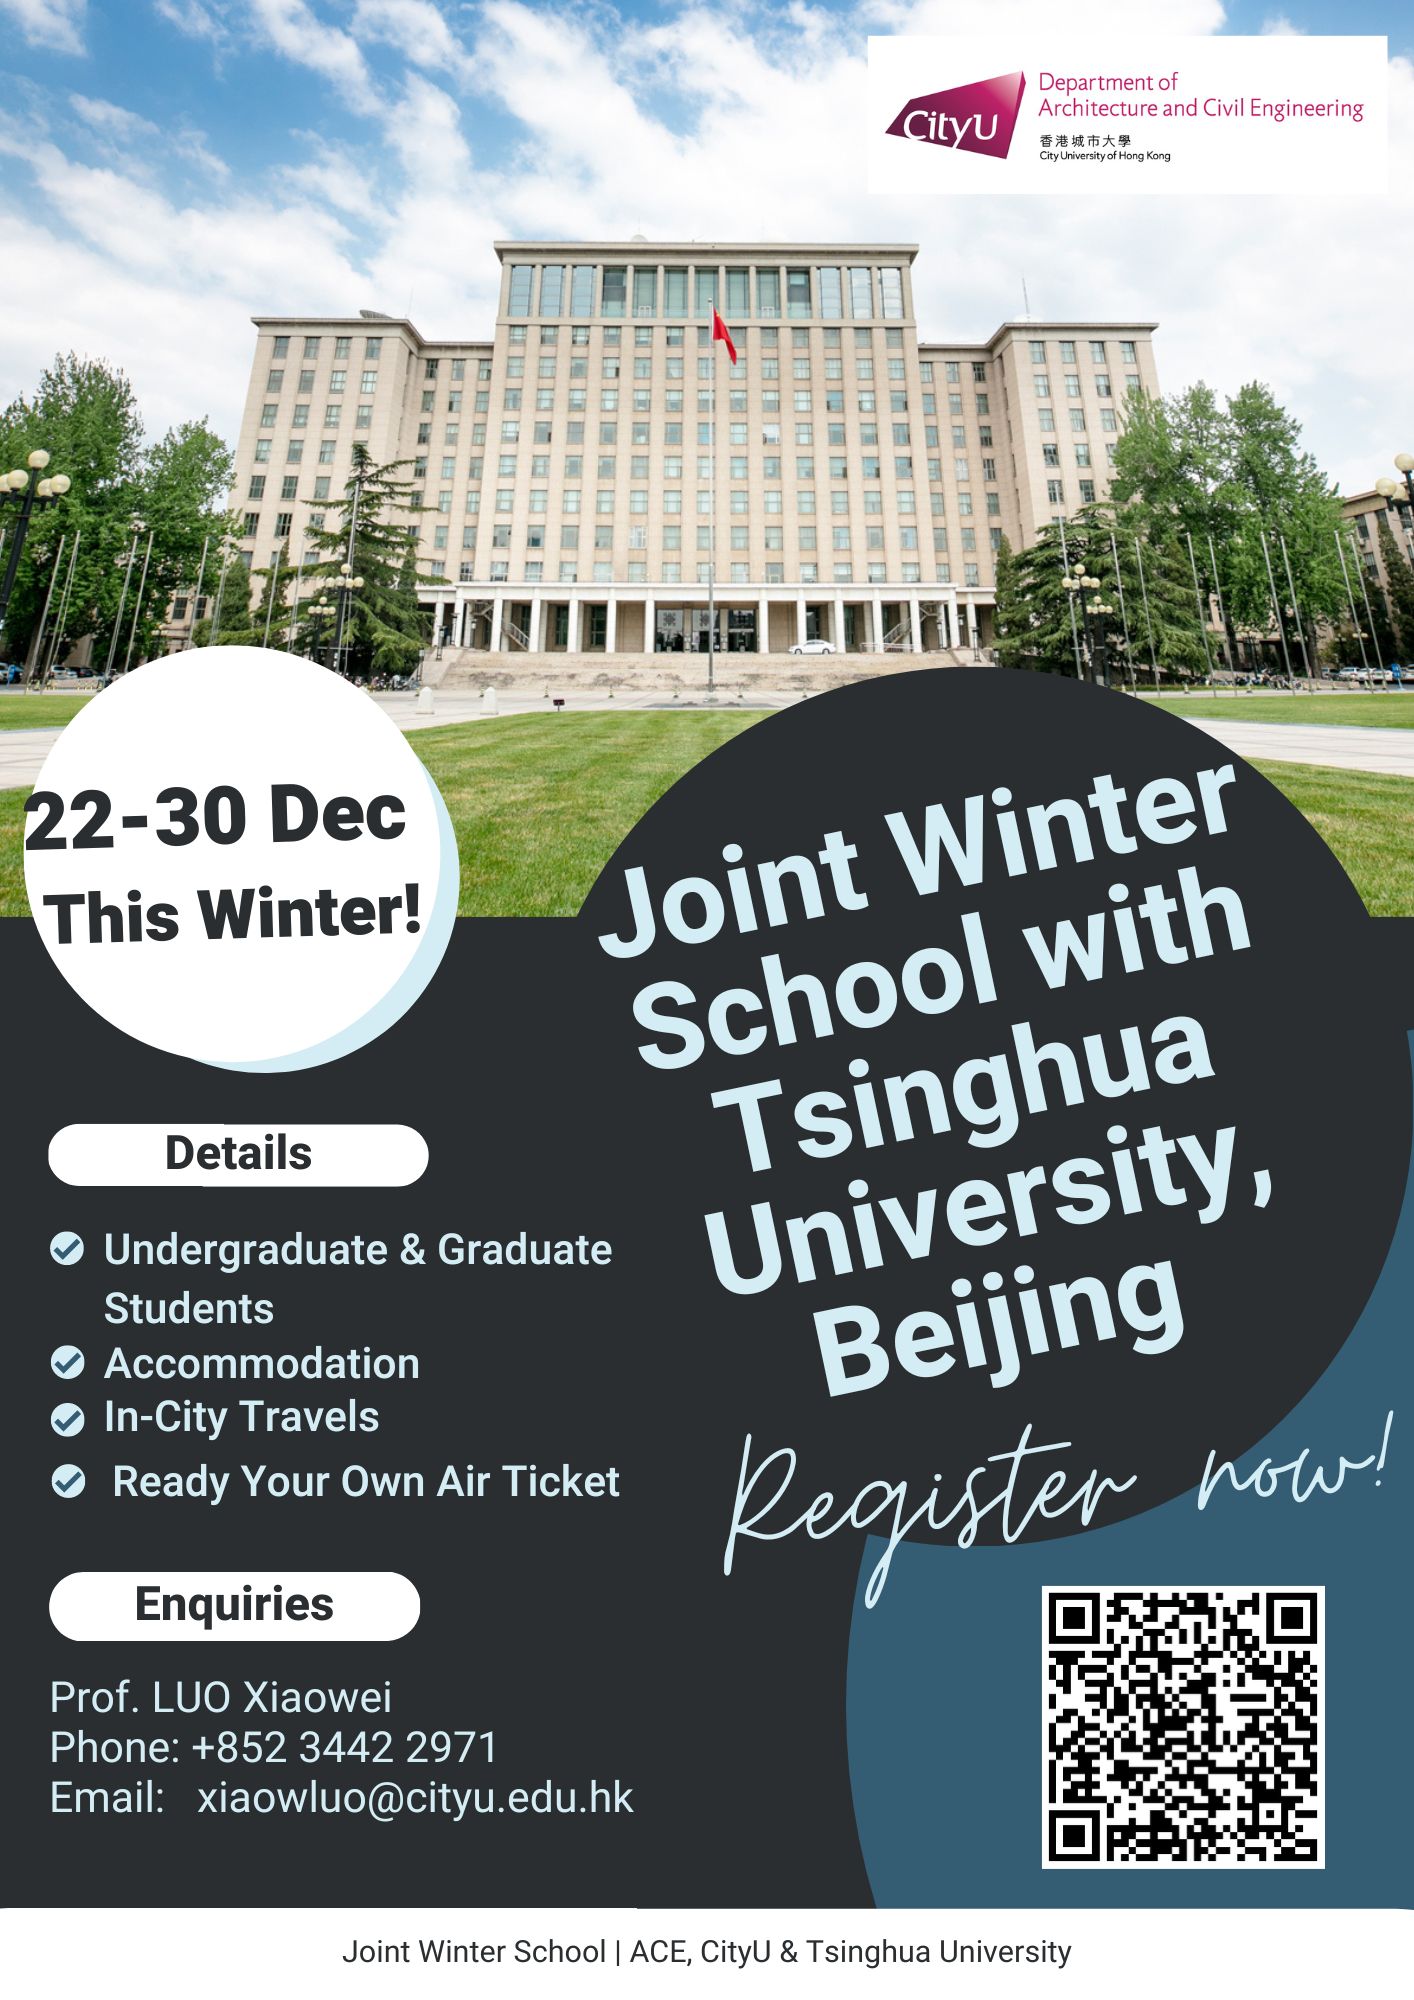 Joint Winter School with Tsinghua University